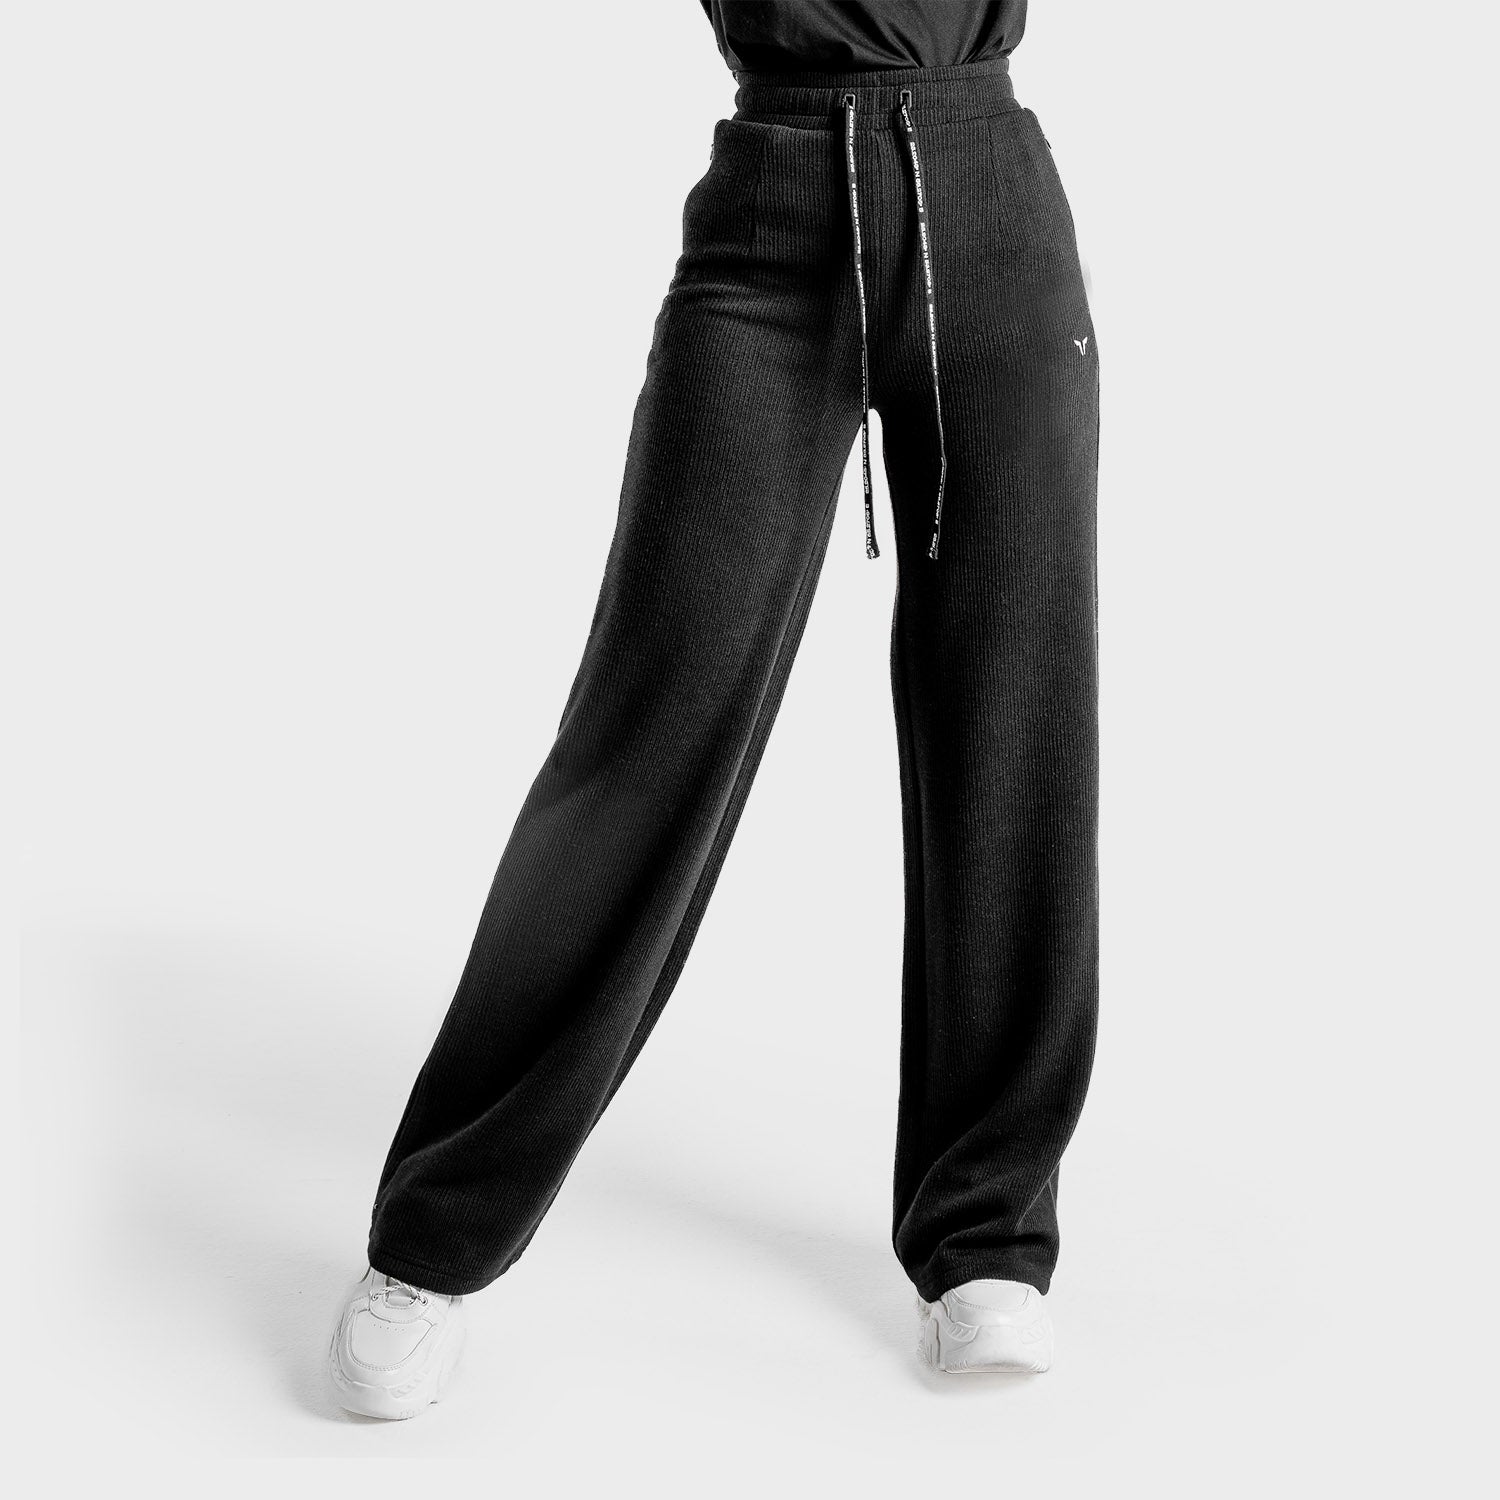 CA, Luxe Wide Leg Pants - Black, Workout Pants Women